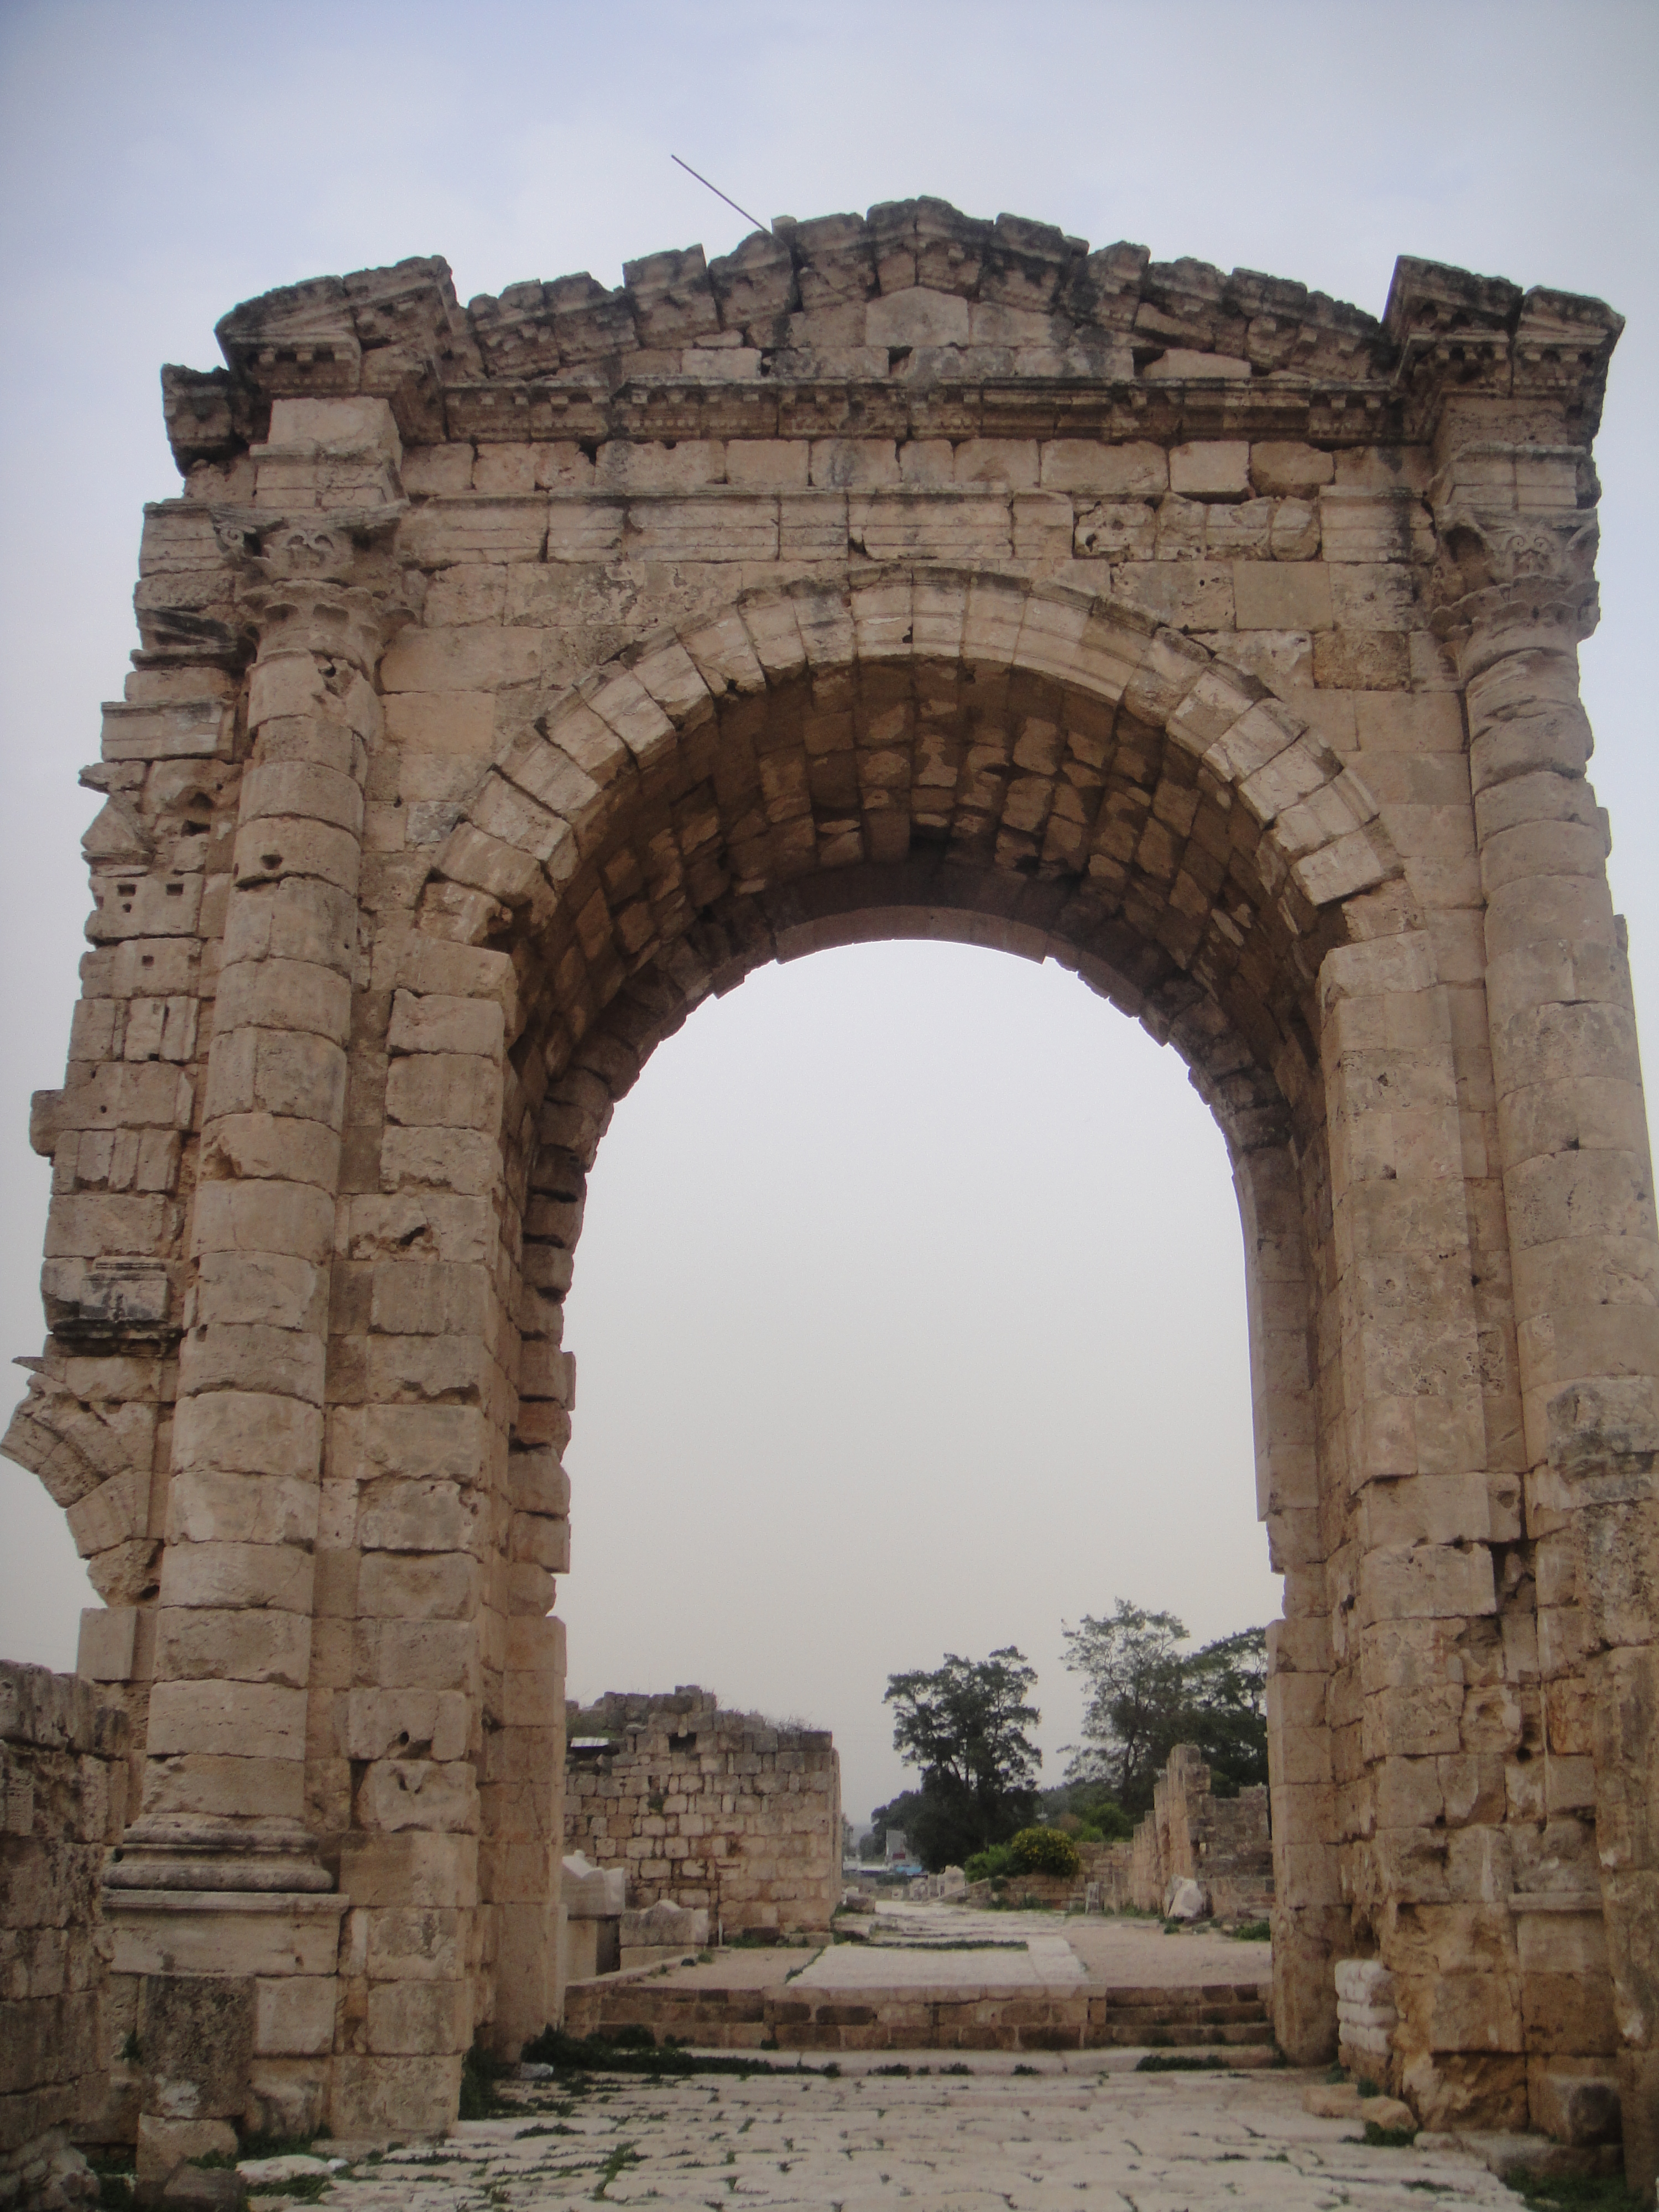 Monumental Archway, Lebanon